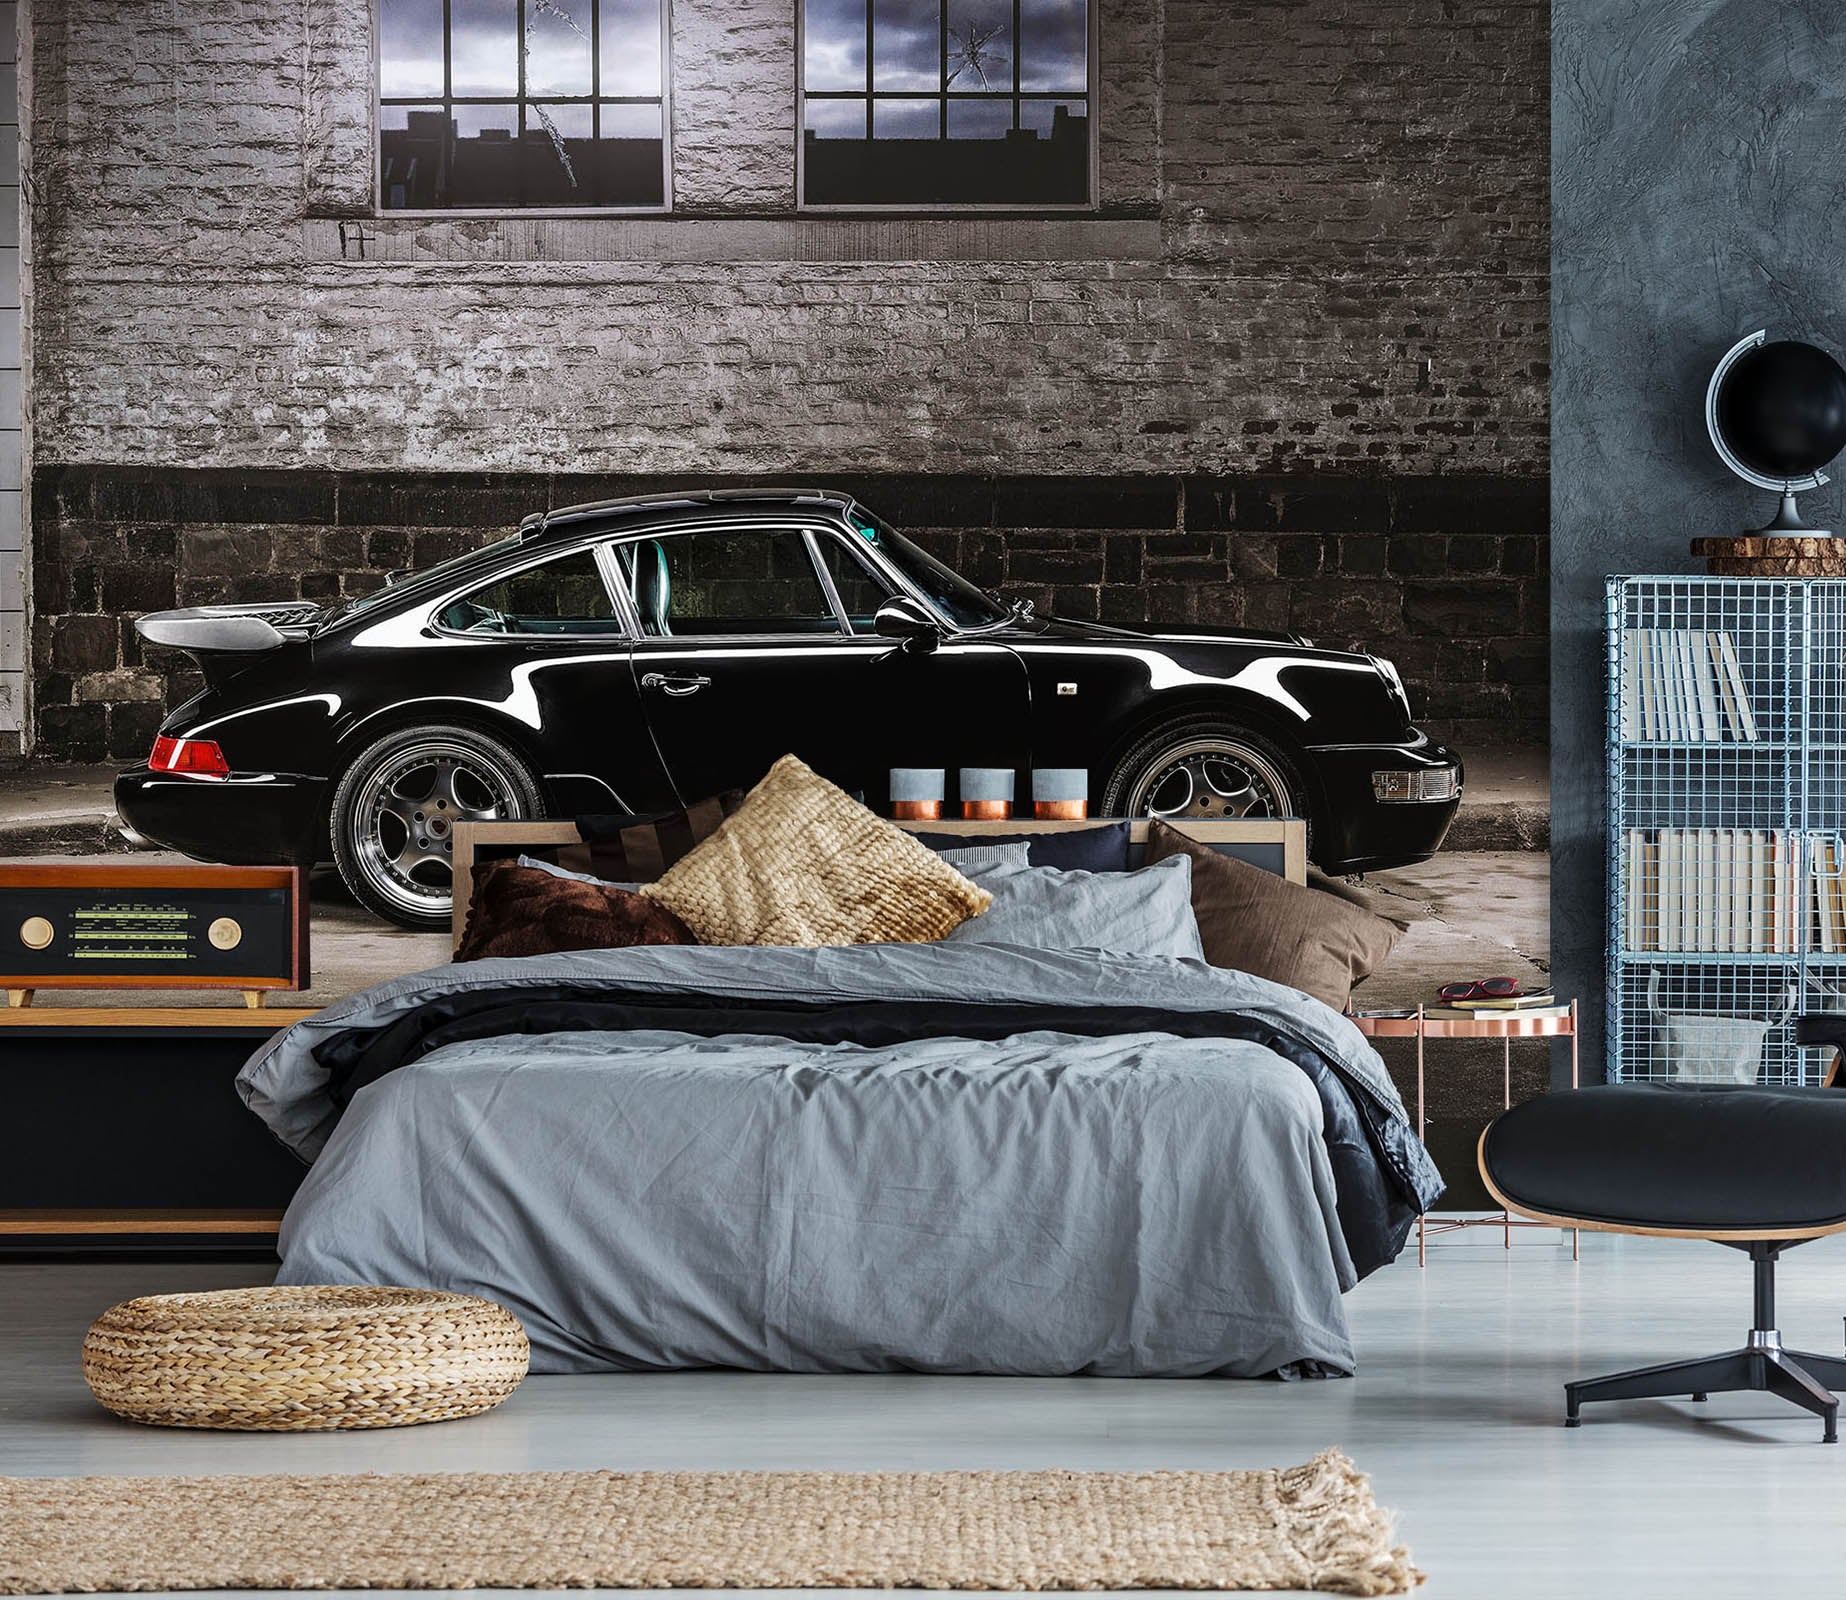 3D Black Luxury Car 1132 Wall Murals